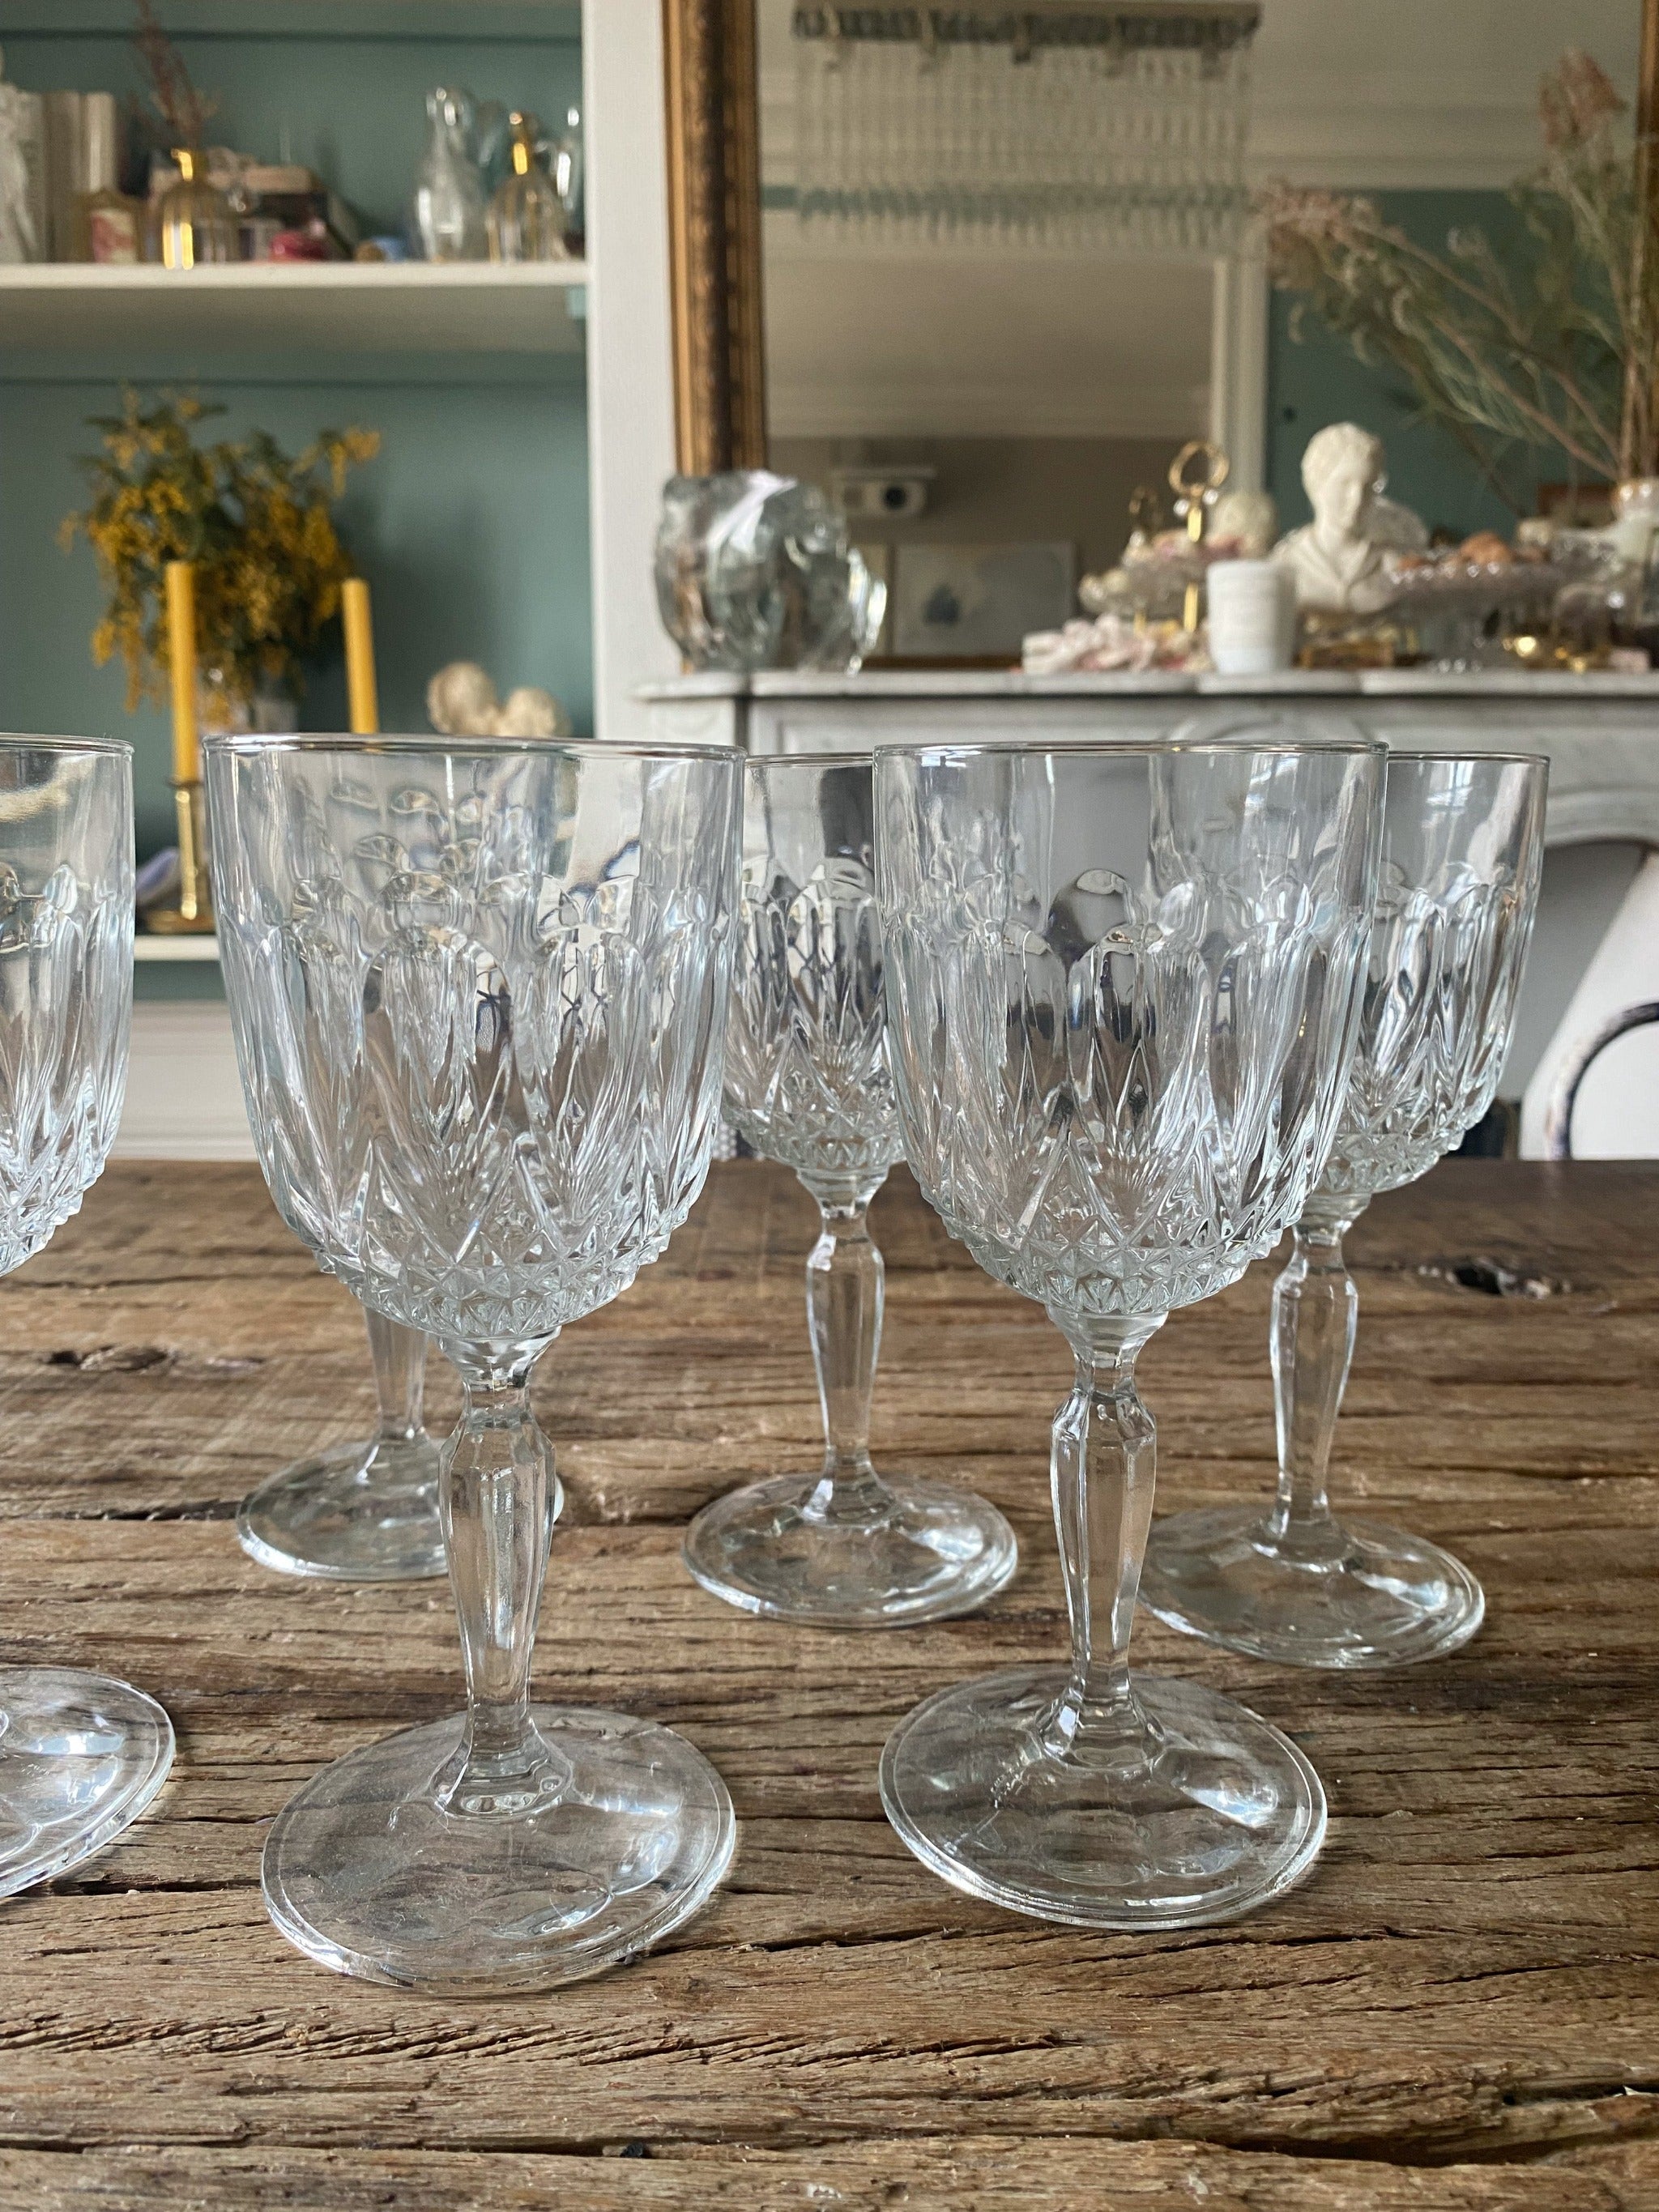 Vintage Inspired Drinkware  Unique glassware, Cocktail glassware